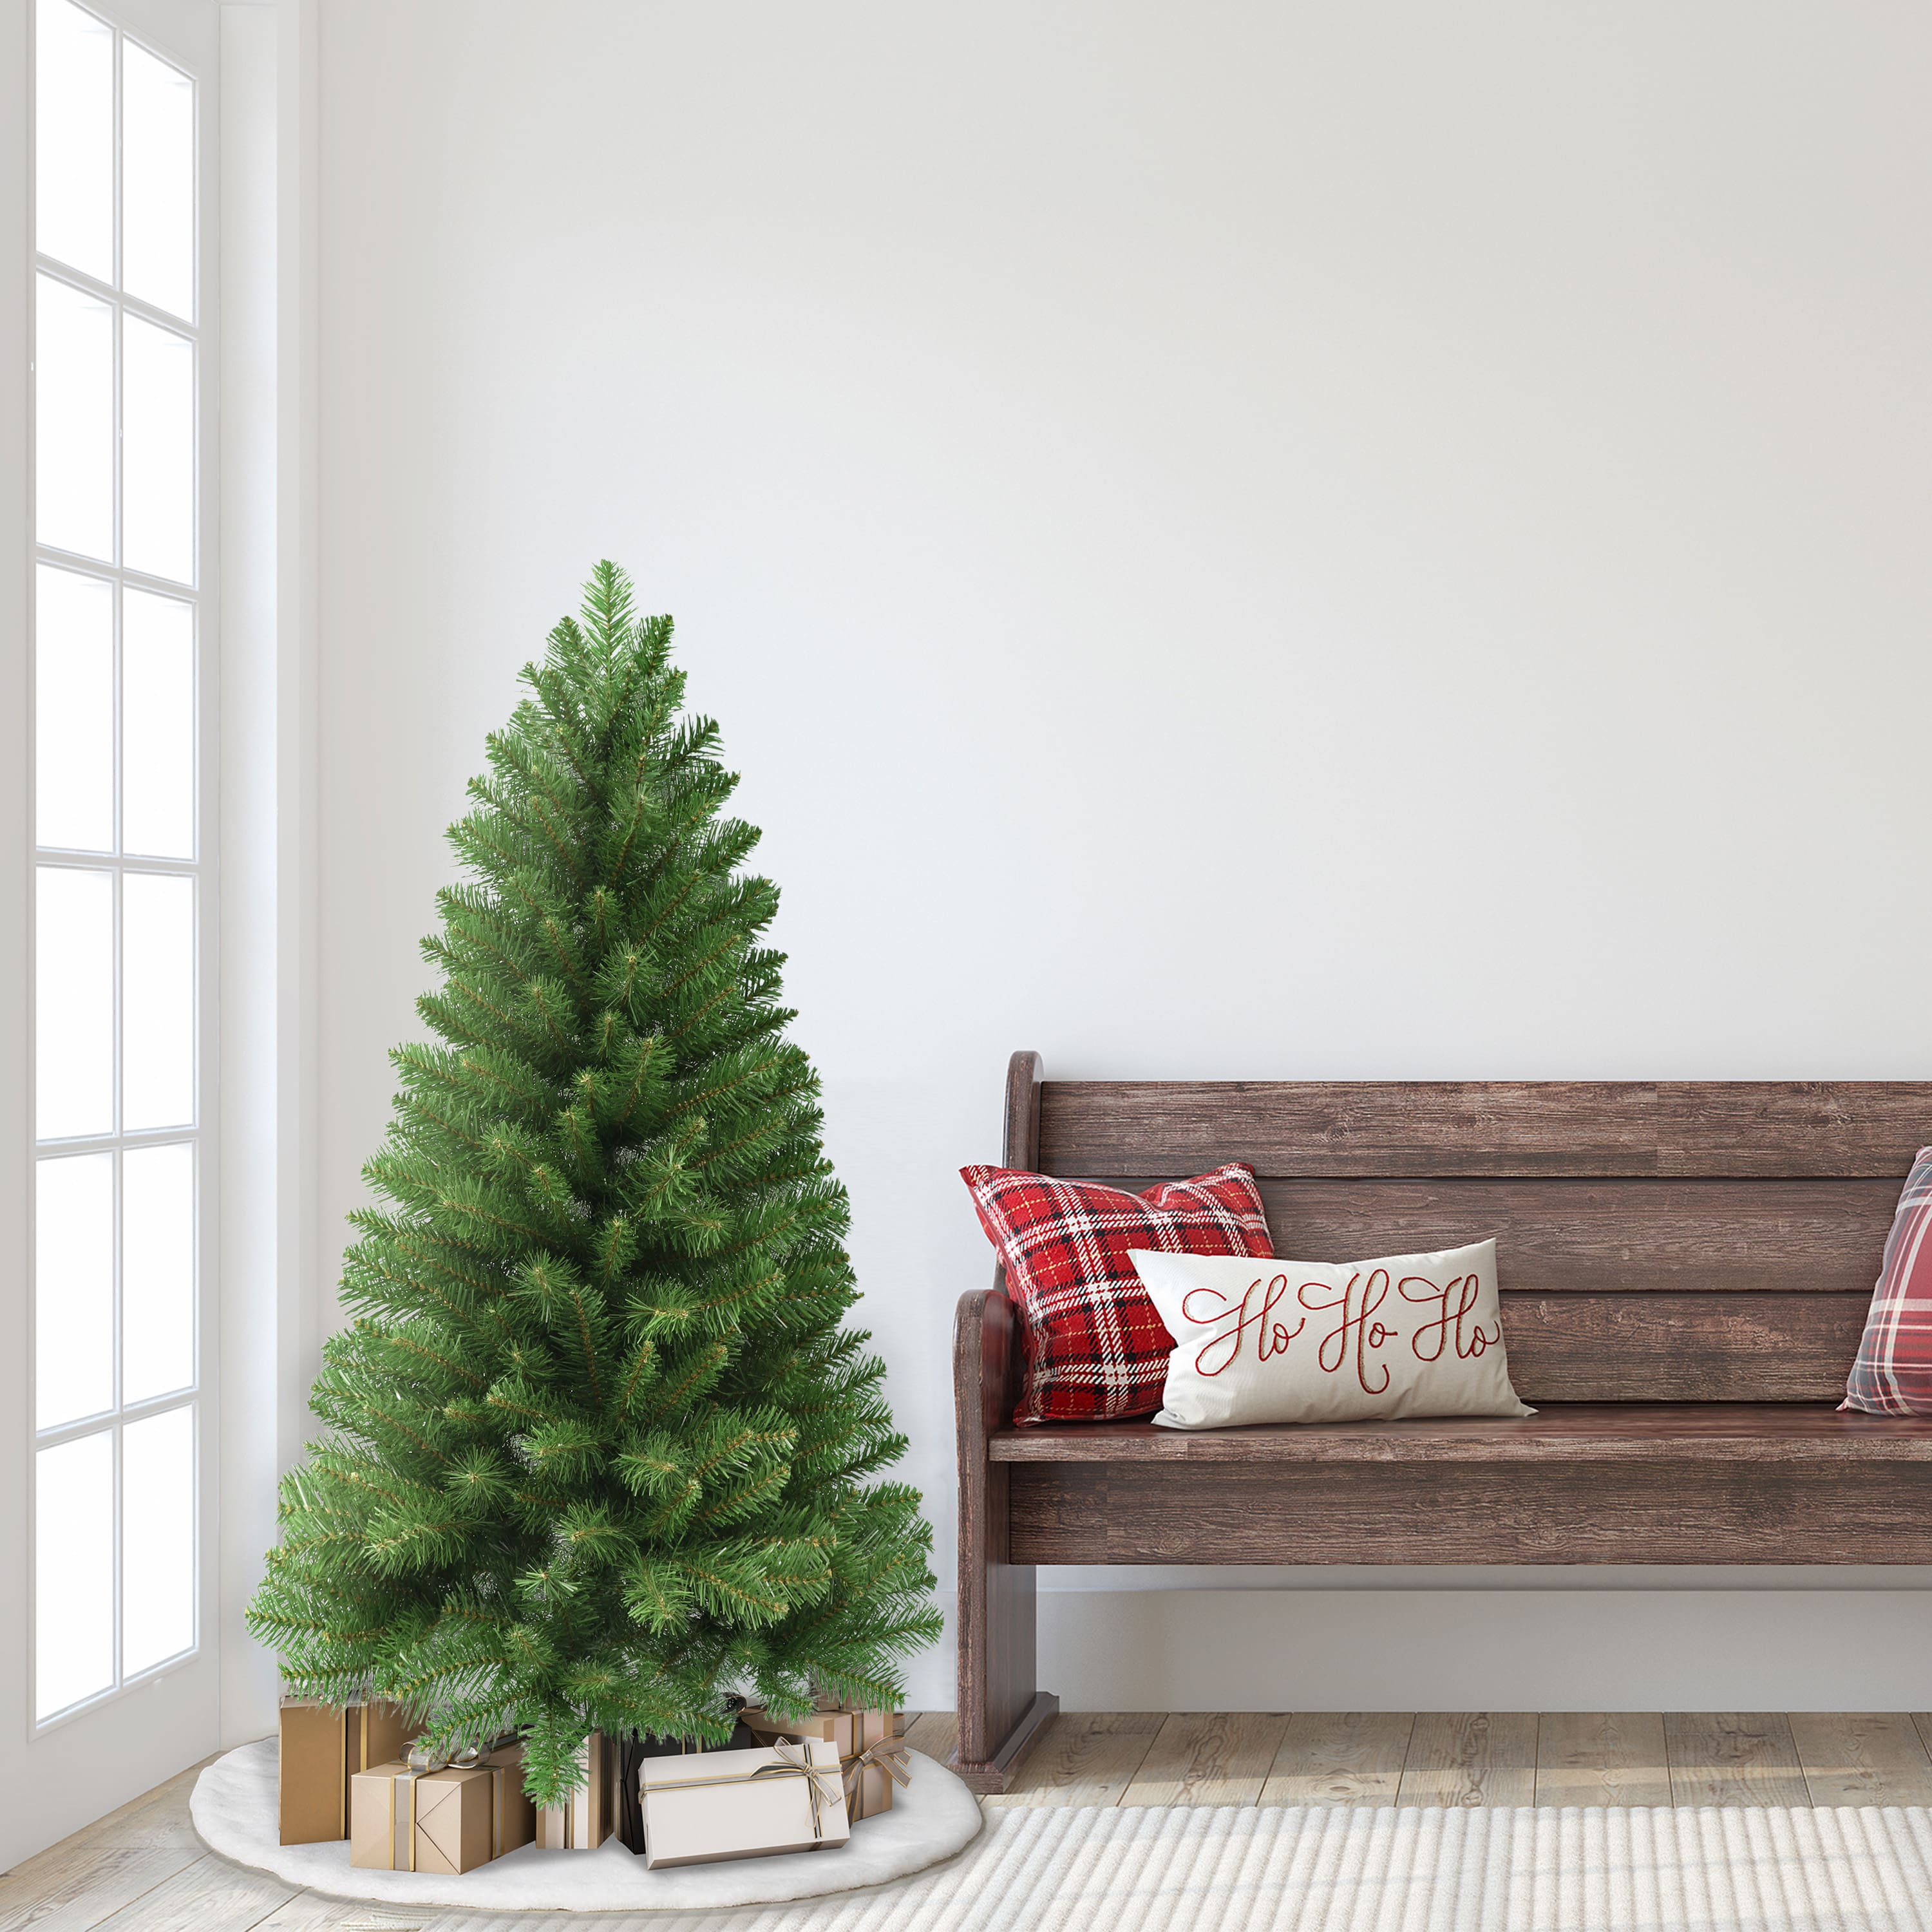 6 Pack: 4.5ft. Unlit Virginia Pine Artificial Christmas Tree